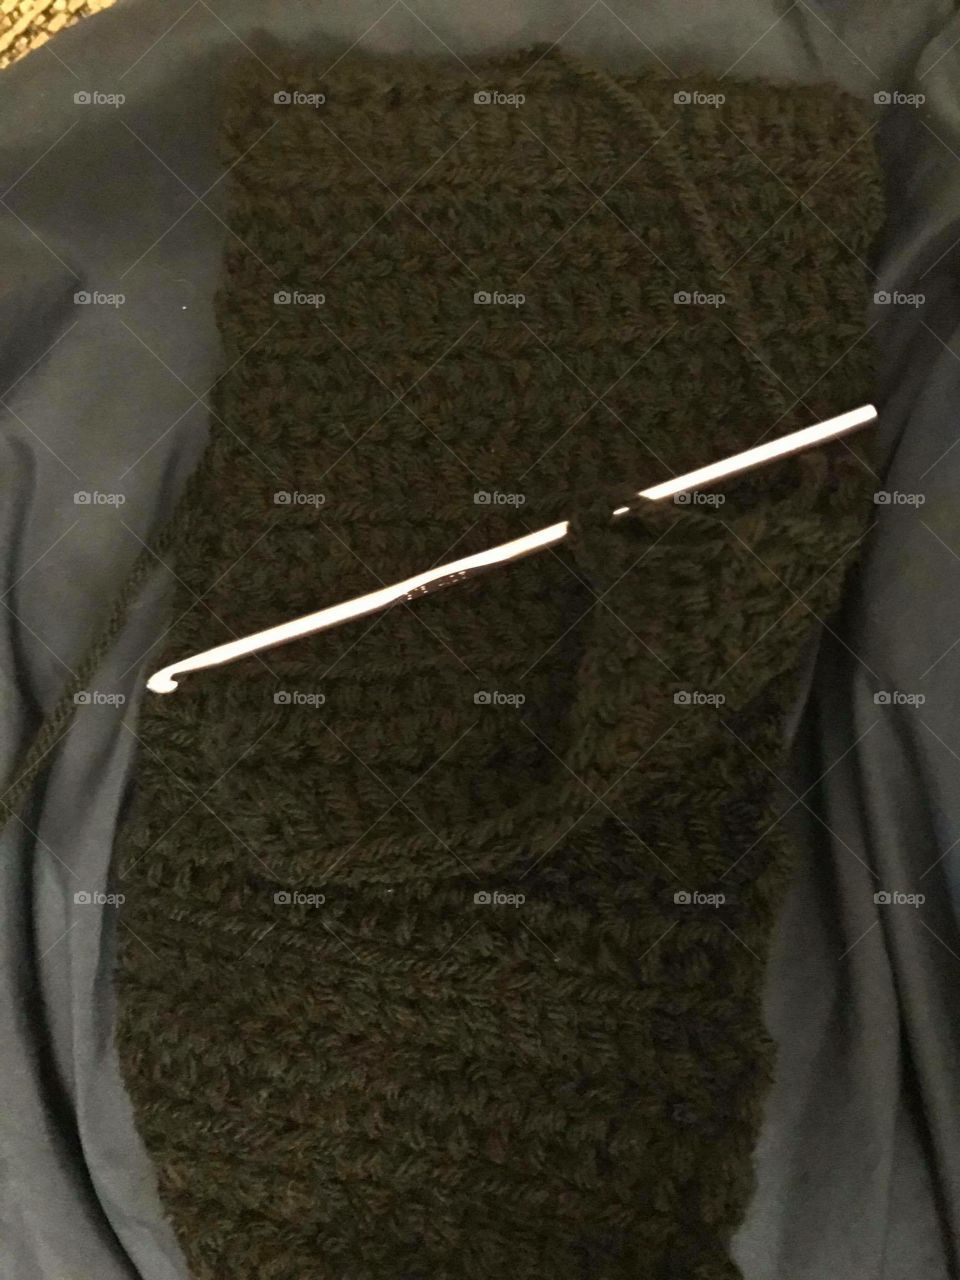 Crocheting a scarf. 